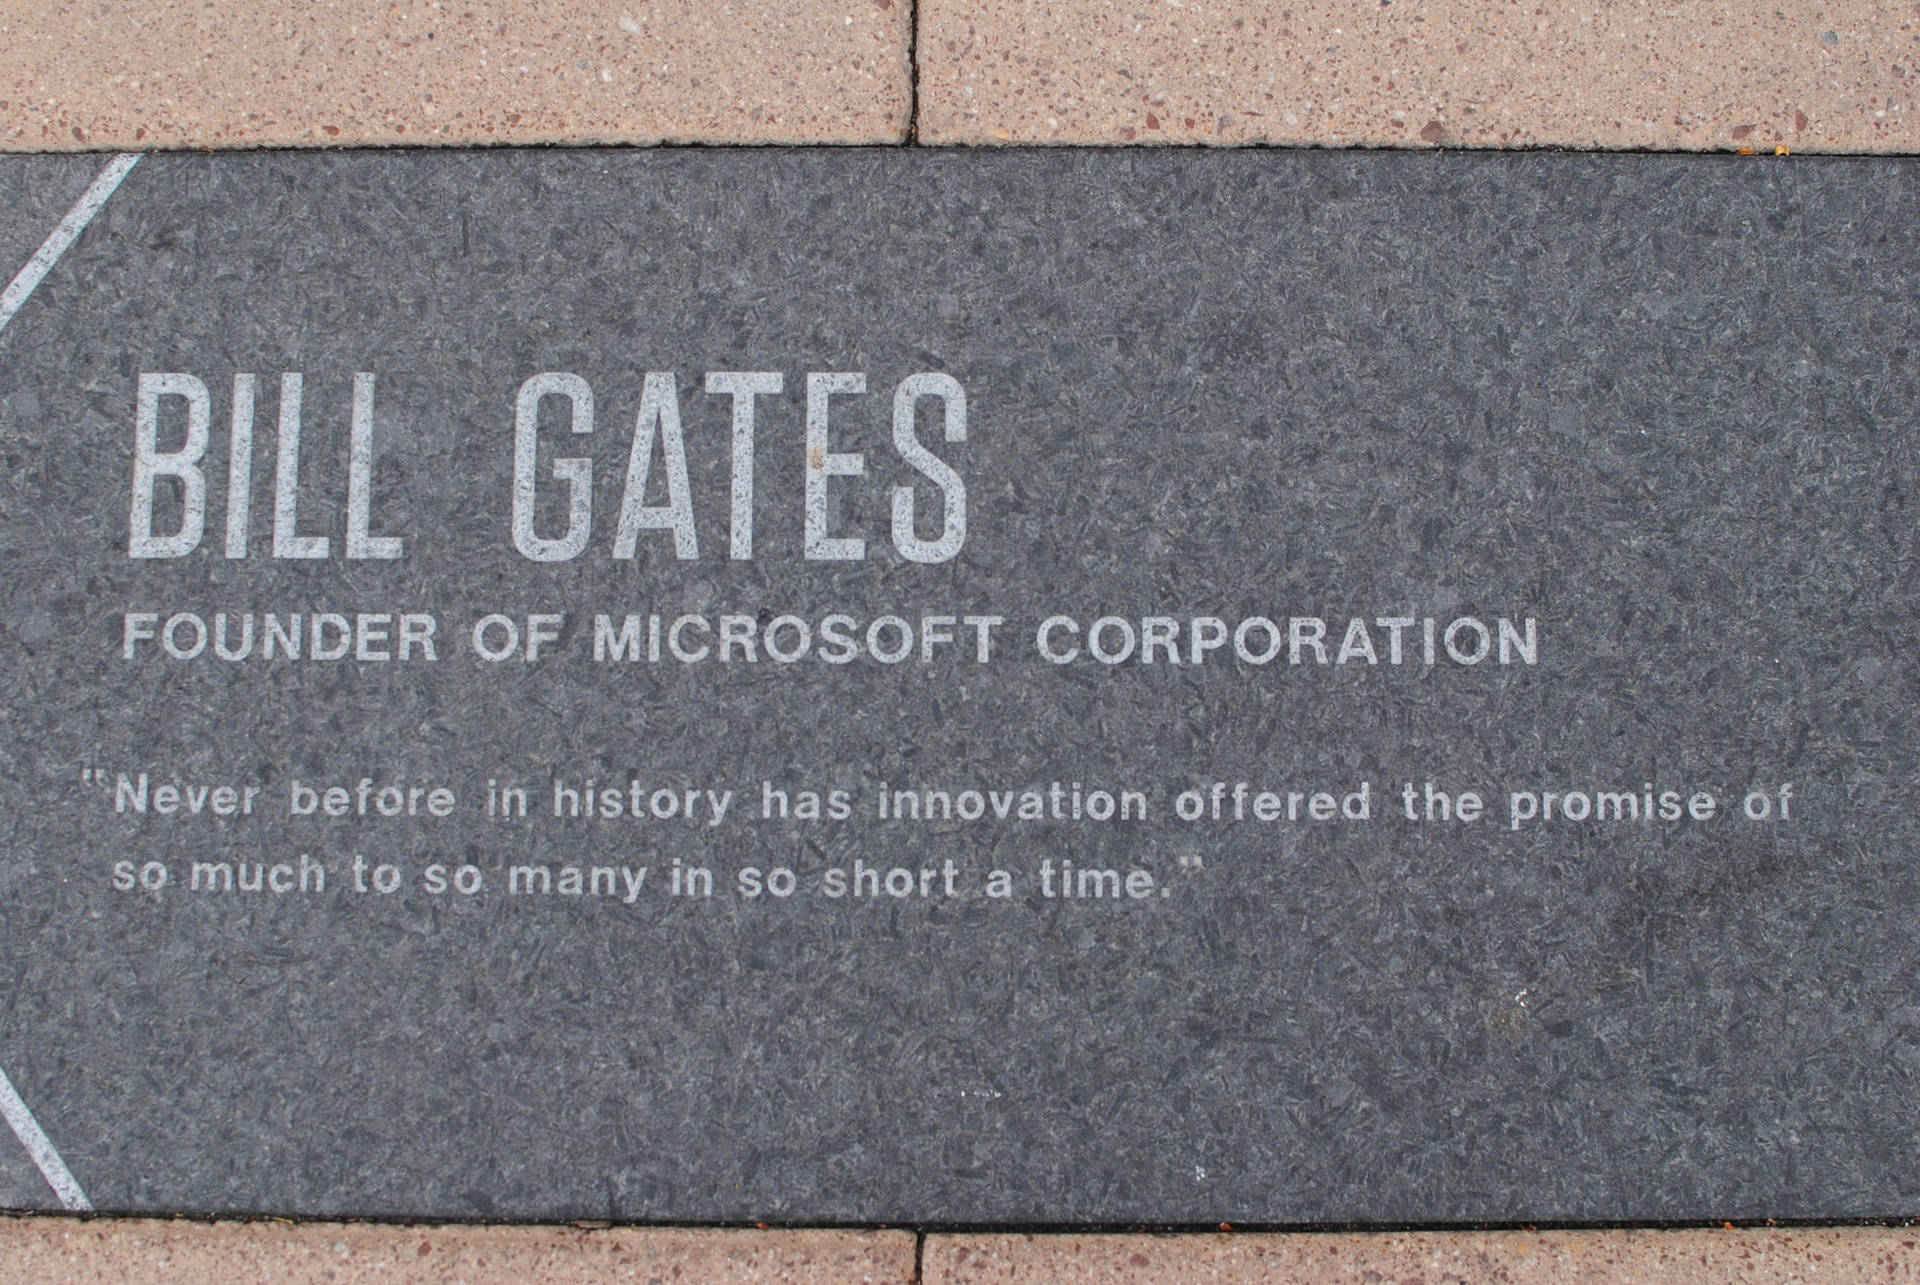 Bill Gates Founder Of Microsoft Corporation Background